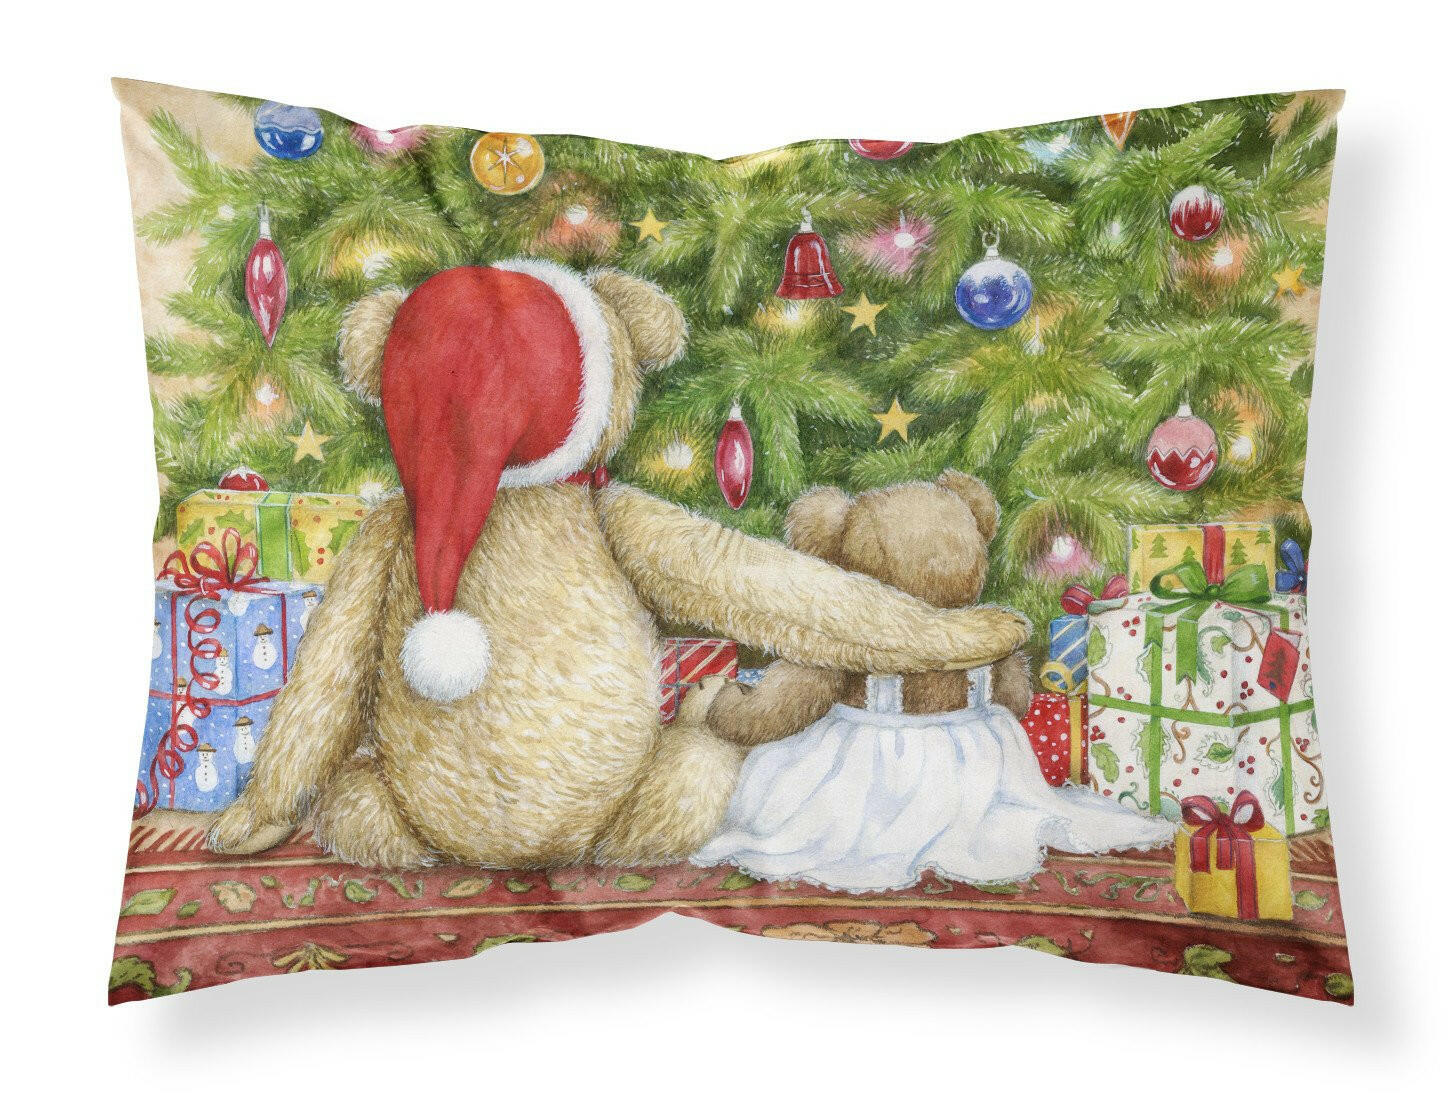 Christmas Teddy Bears with Tree Fabric Standard Pillowcase CDCO0415PILLOWCASE by Caroline's Treasures